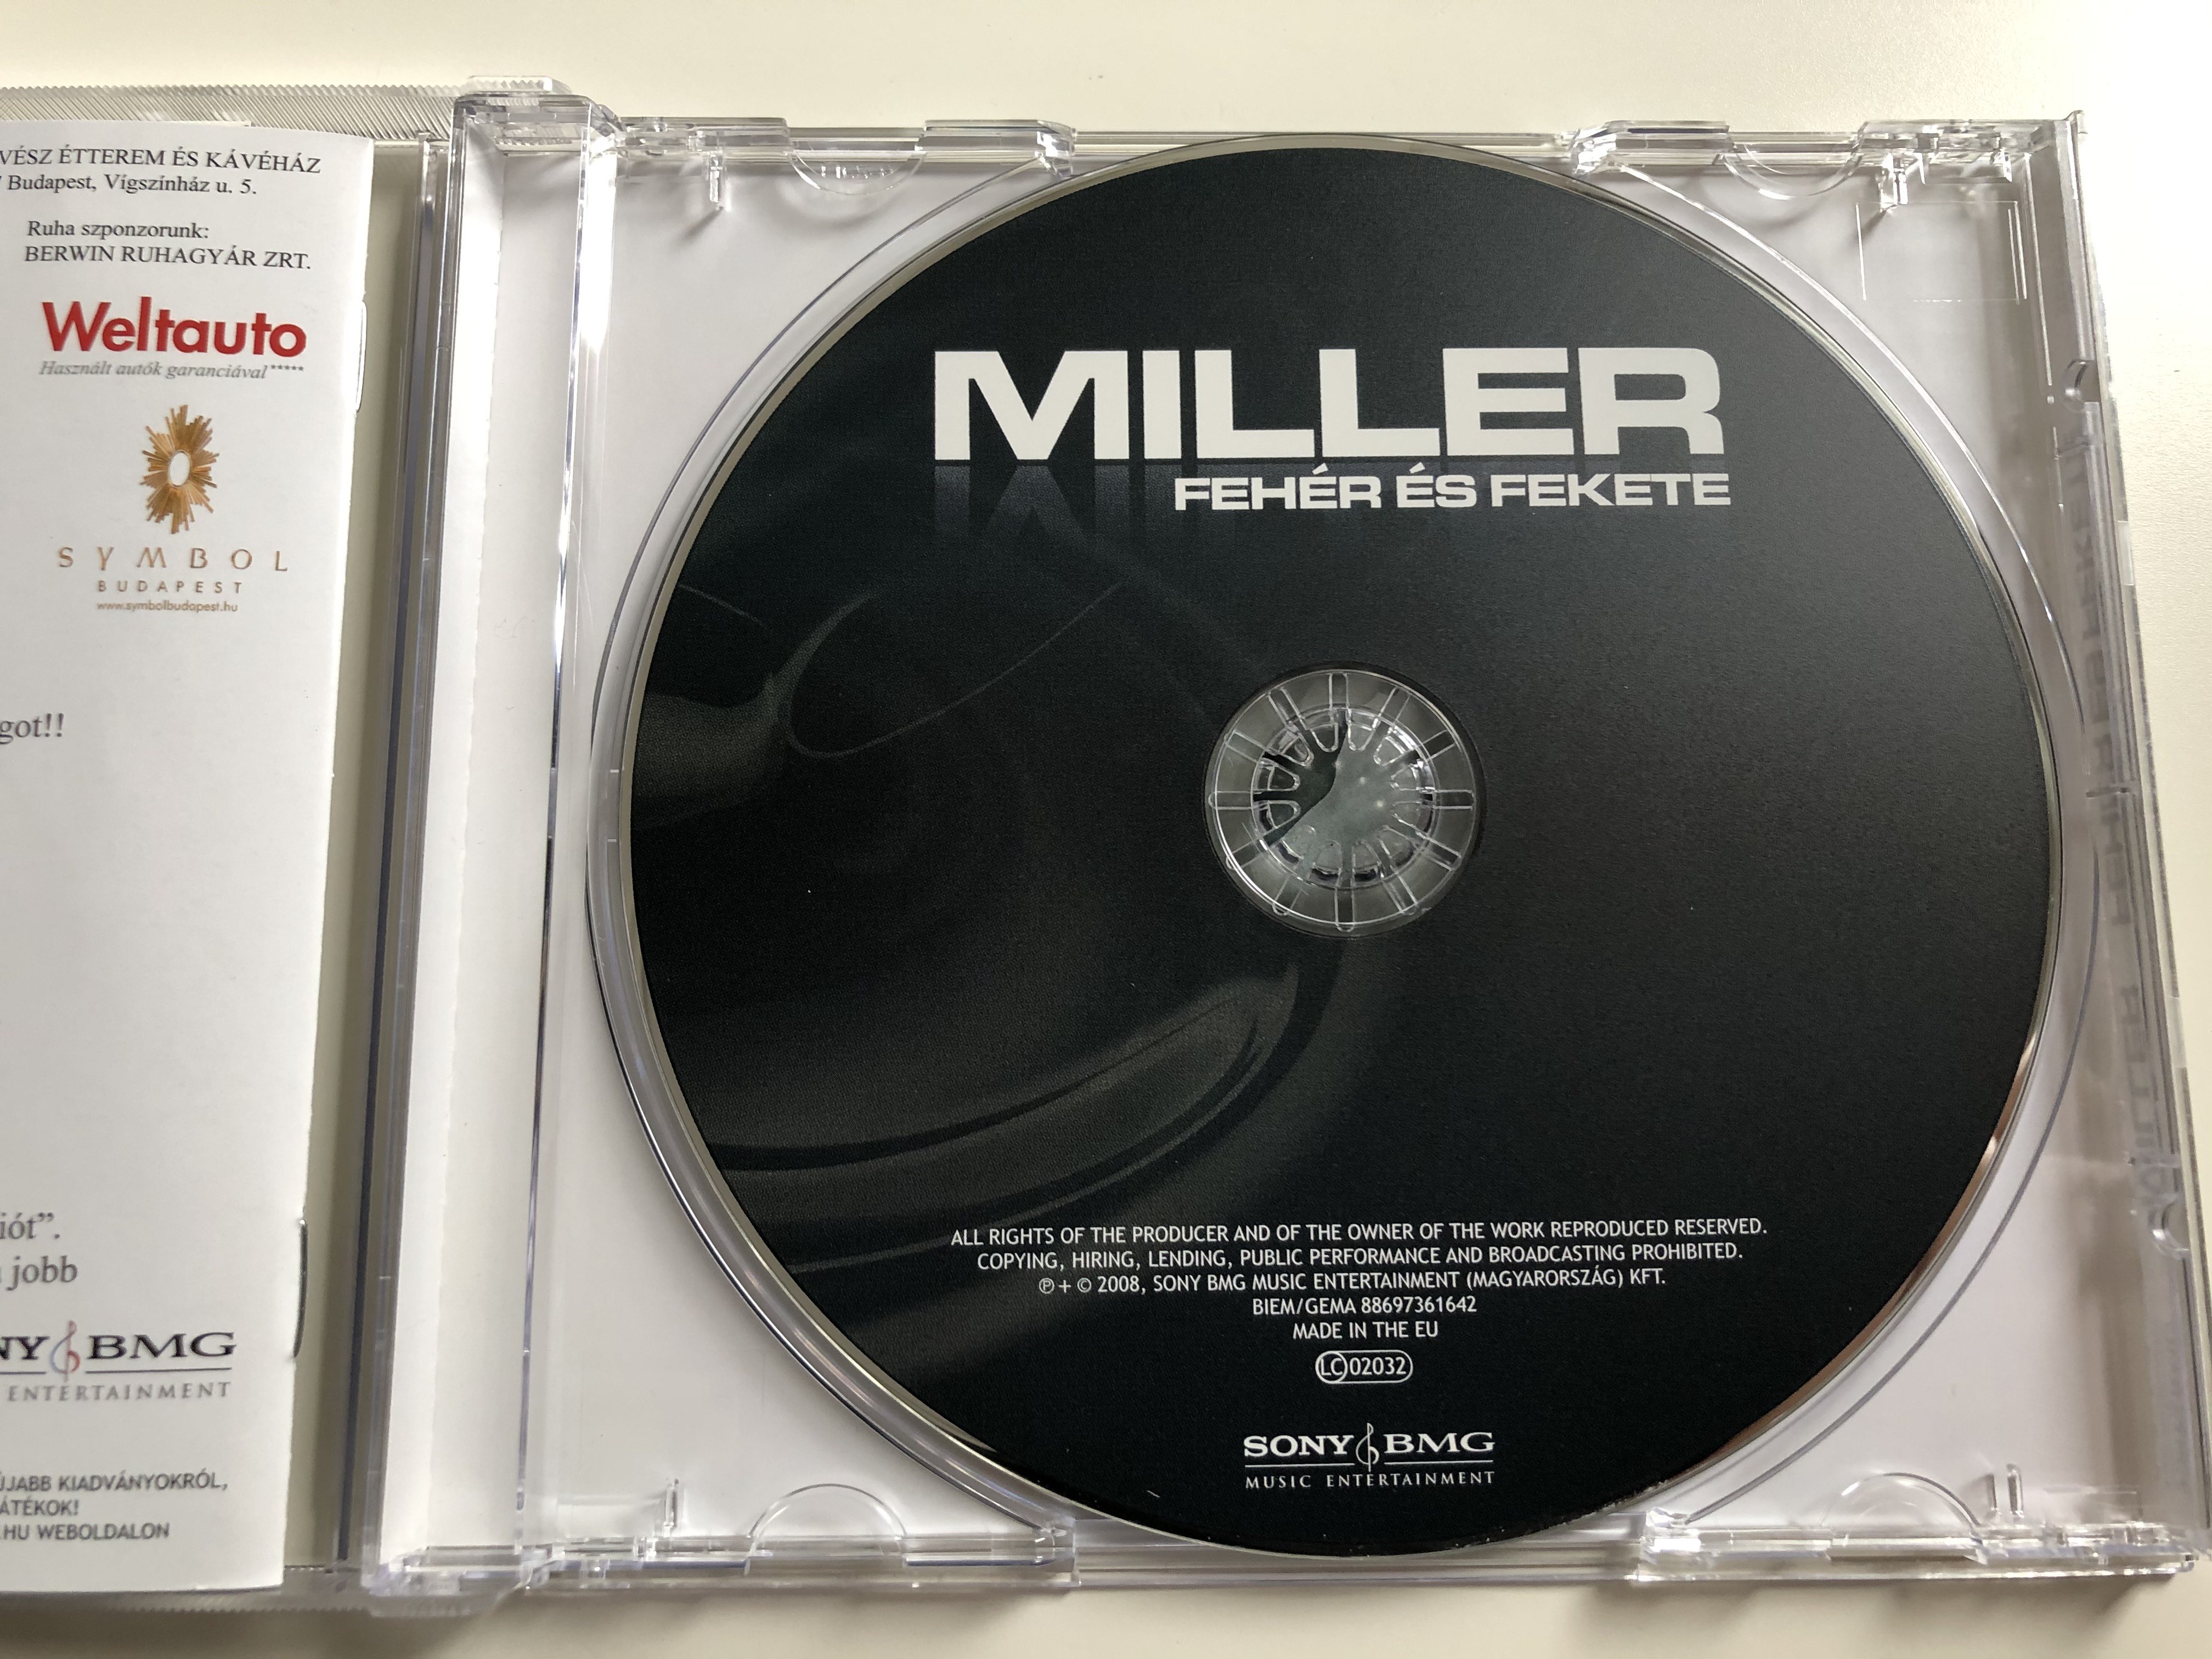 miller-feh-r-s-fekete-sony-bmg-music-entertainment-audio-cd-2008-88697361642-6-.jpg